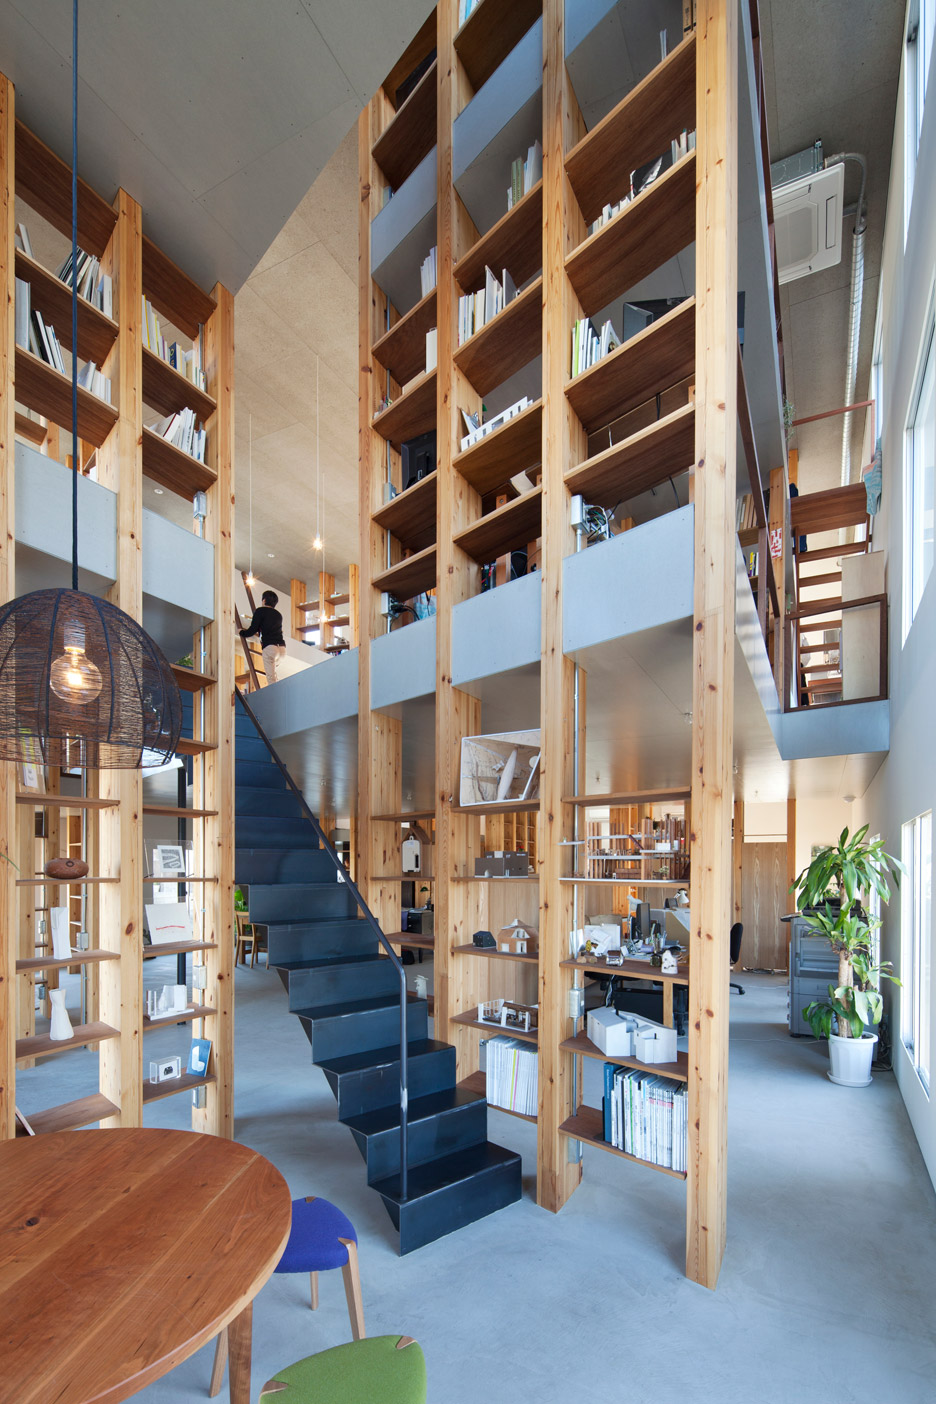 Mamiya Shinichi Design Studio Recreates “feeling Of Being In A Grove” Inside Its Own Office